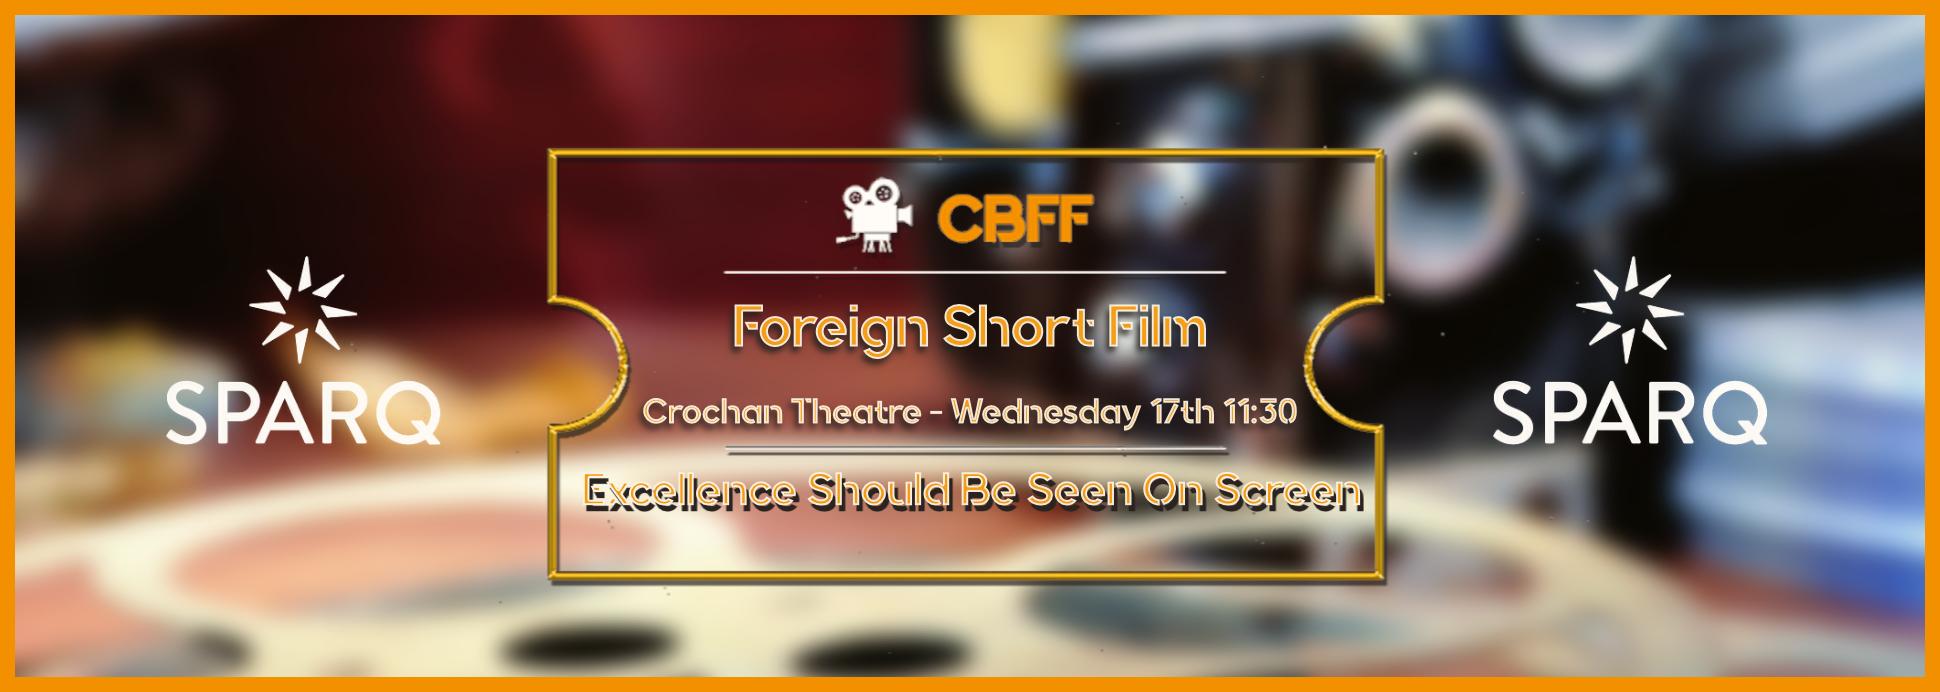 Crochan Foreign - Short Film 17th 11:30